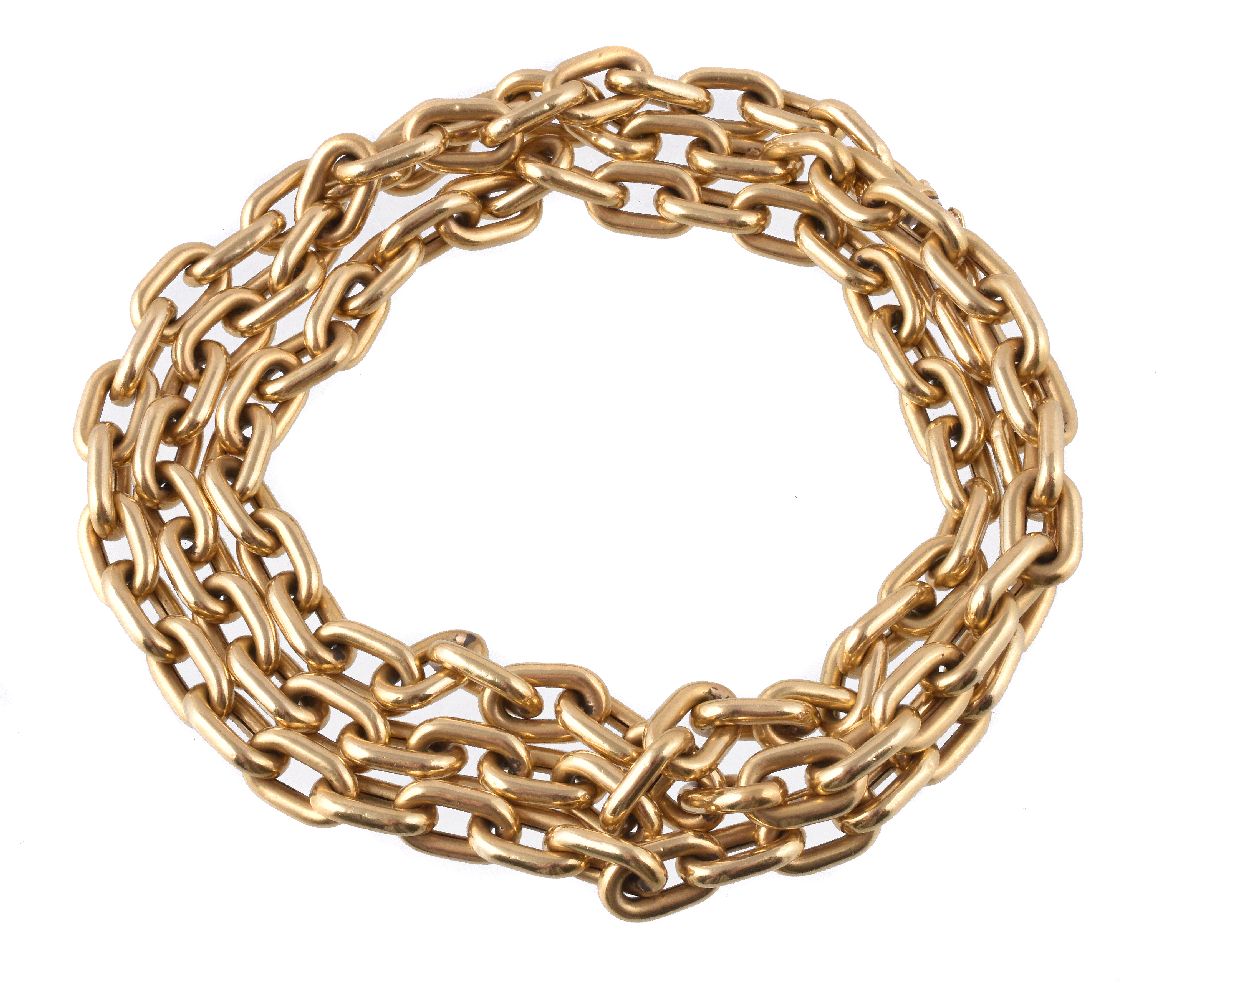 An 18 carat gold necklace